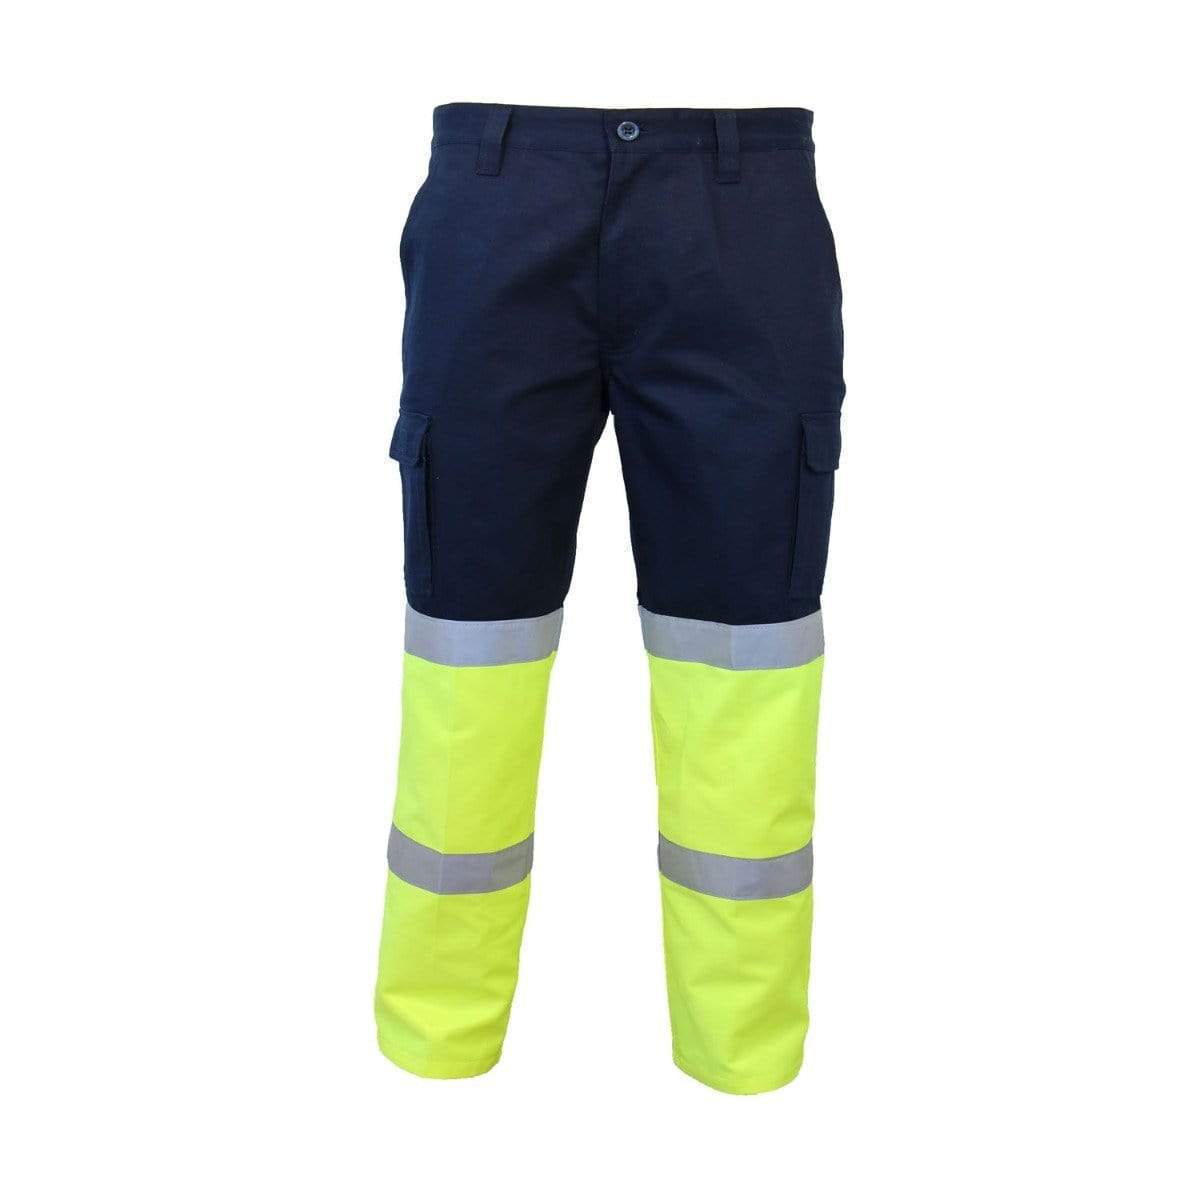 Dnc Workwear 2-tone Bio-motion Taped Cargo Pants - 3363 Work Wear DNC Workwear Navy/HiVis Yellow 72R 